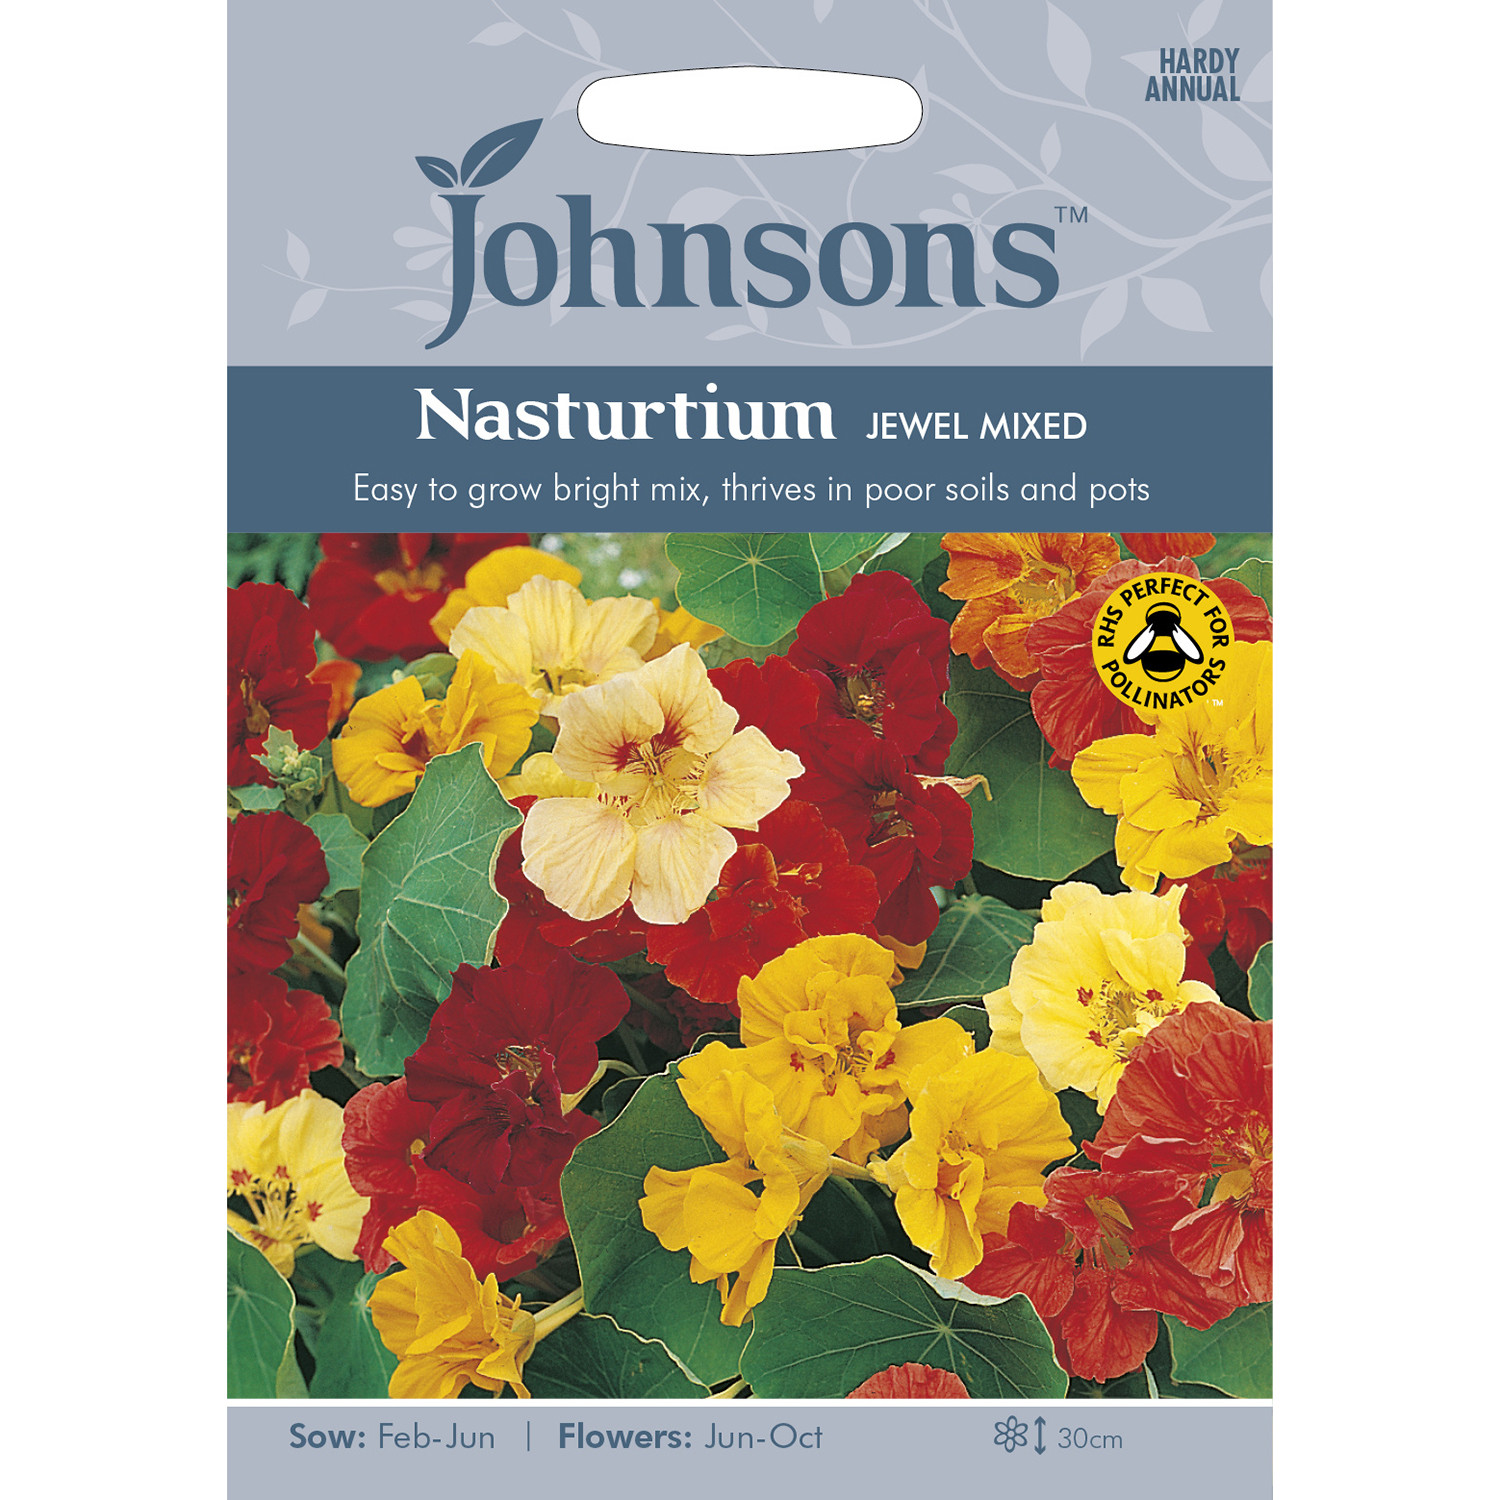 Johnsons Nasturtium Jewel Mixed Flower Seeds Image 2